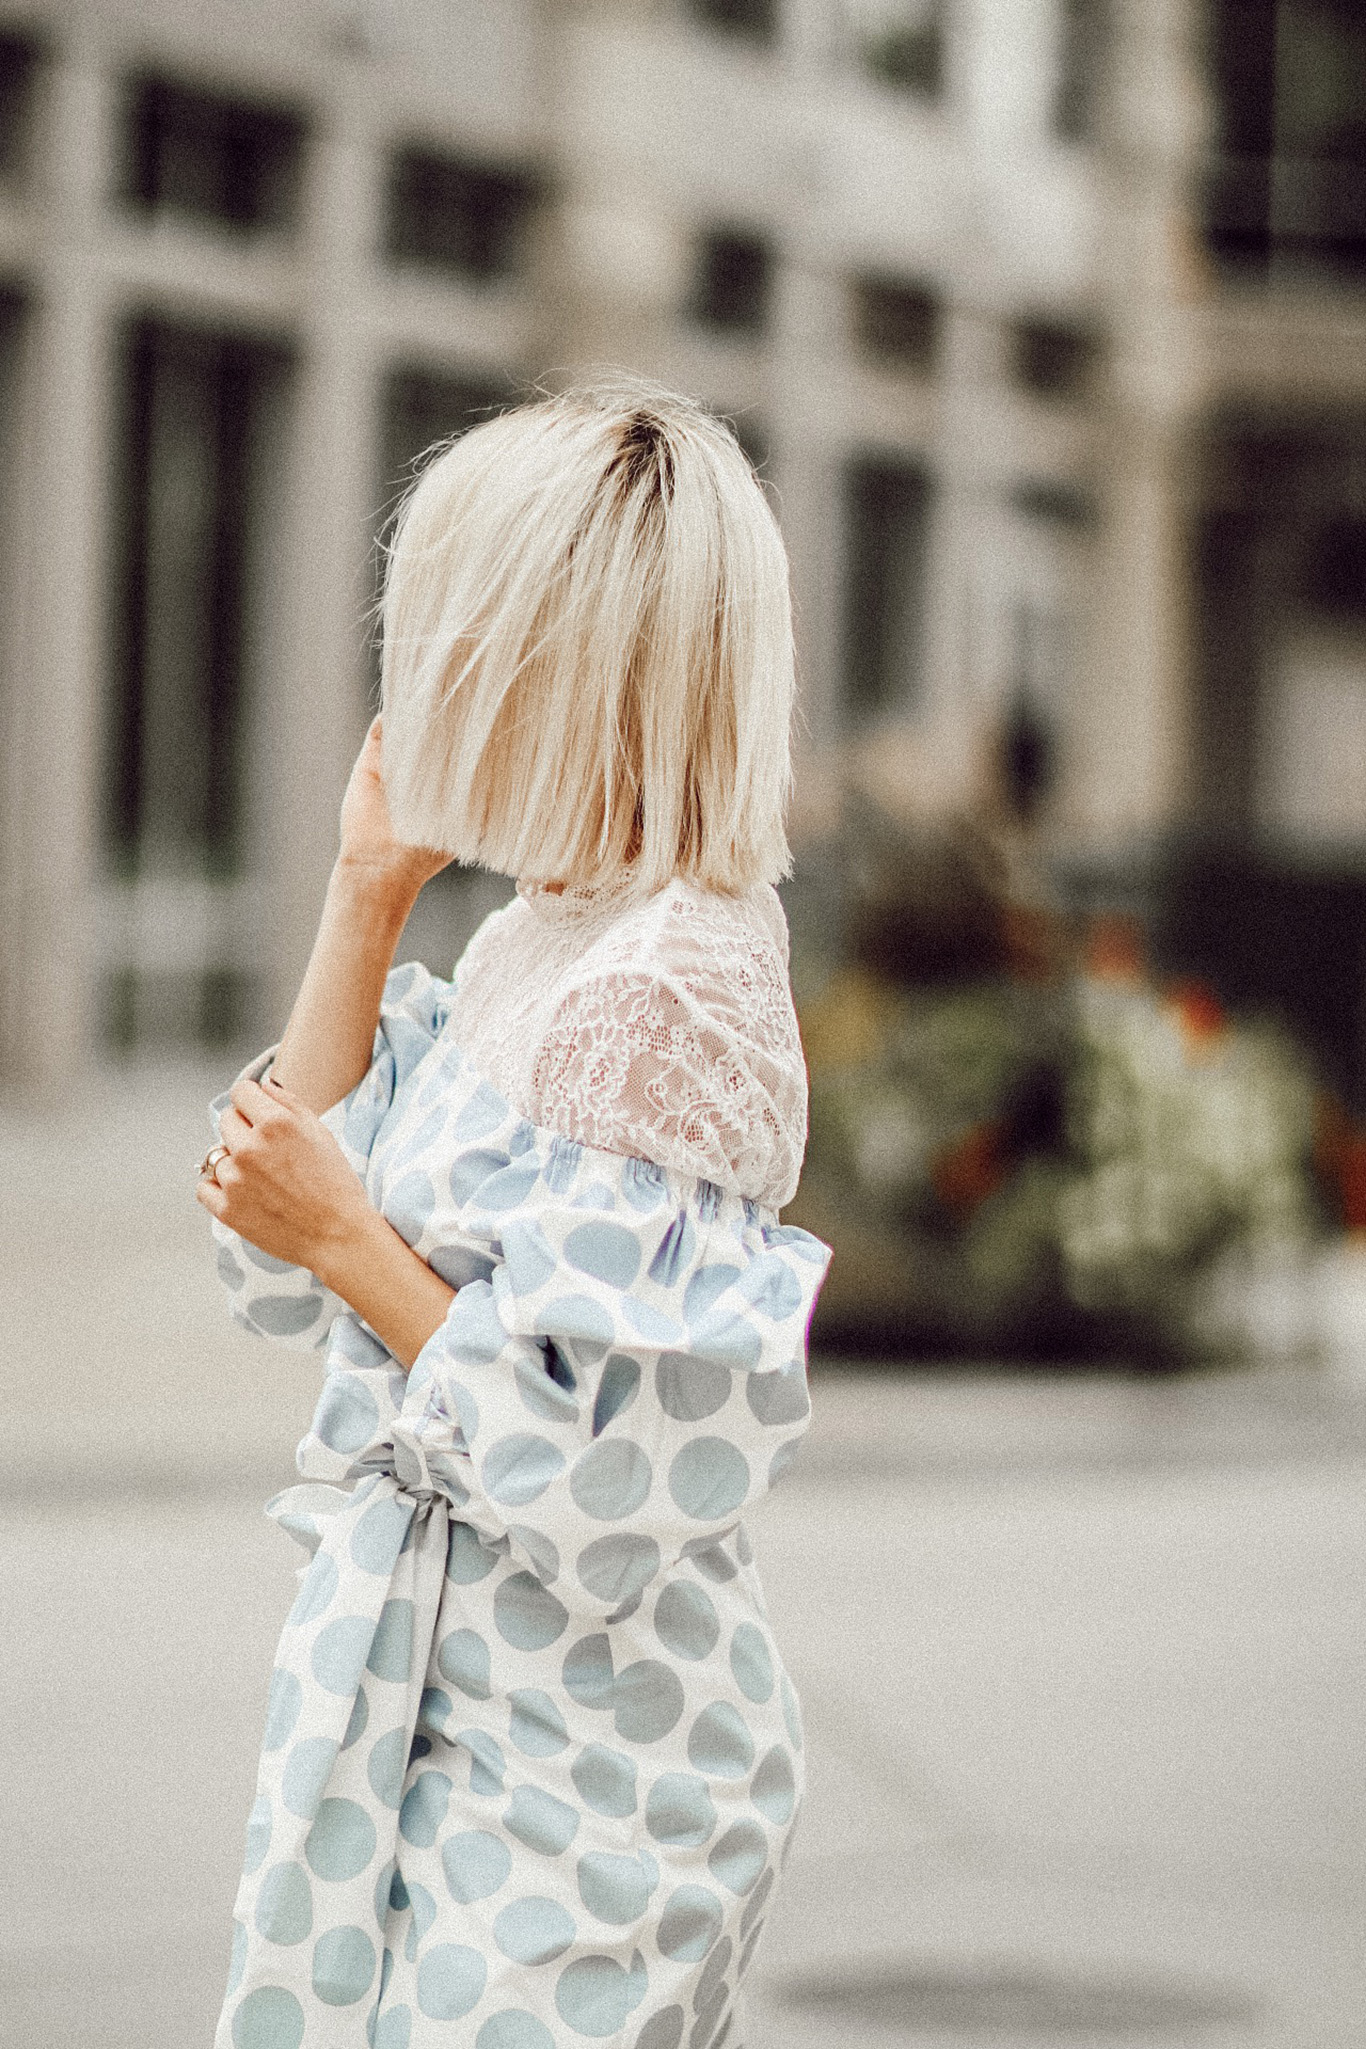 Alena Gidenko of modaprints.com shares her love for lace long sleeve tops